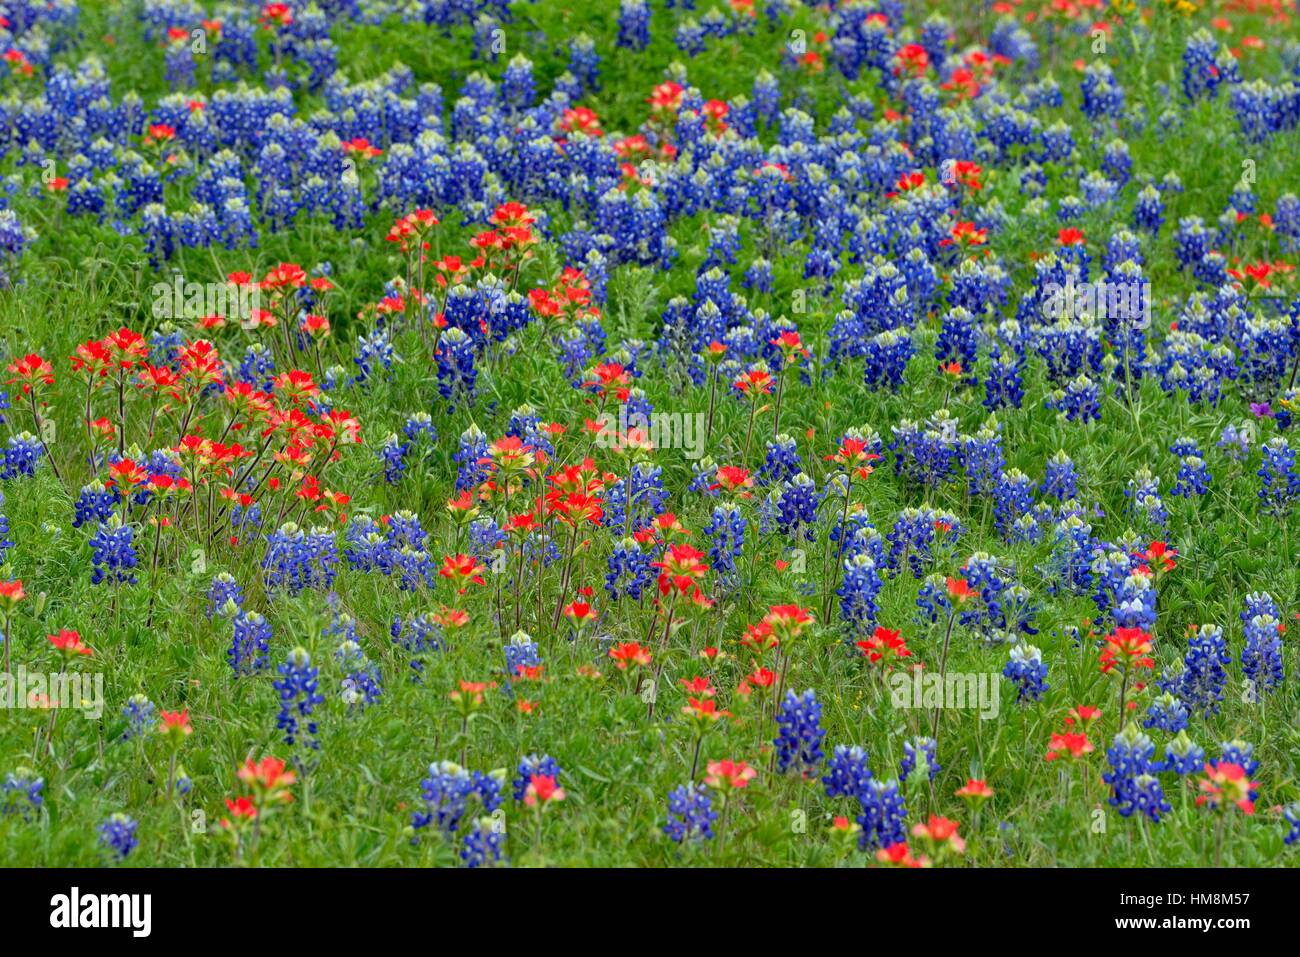 A field with flowering Texas bluebonnet (Lupinus subcarnosus) and Texas paintbrush (Castilleja indivisa), Johnson City, Texas, USA. Stock Photo